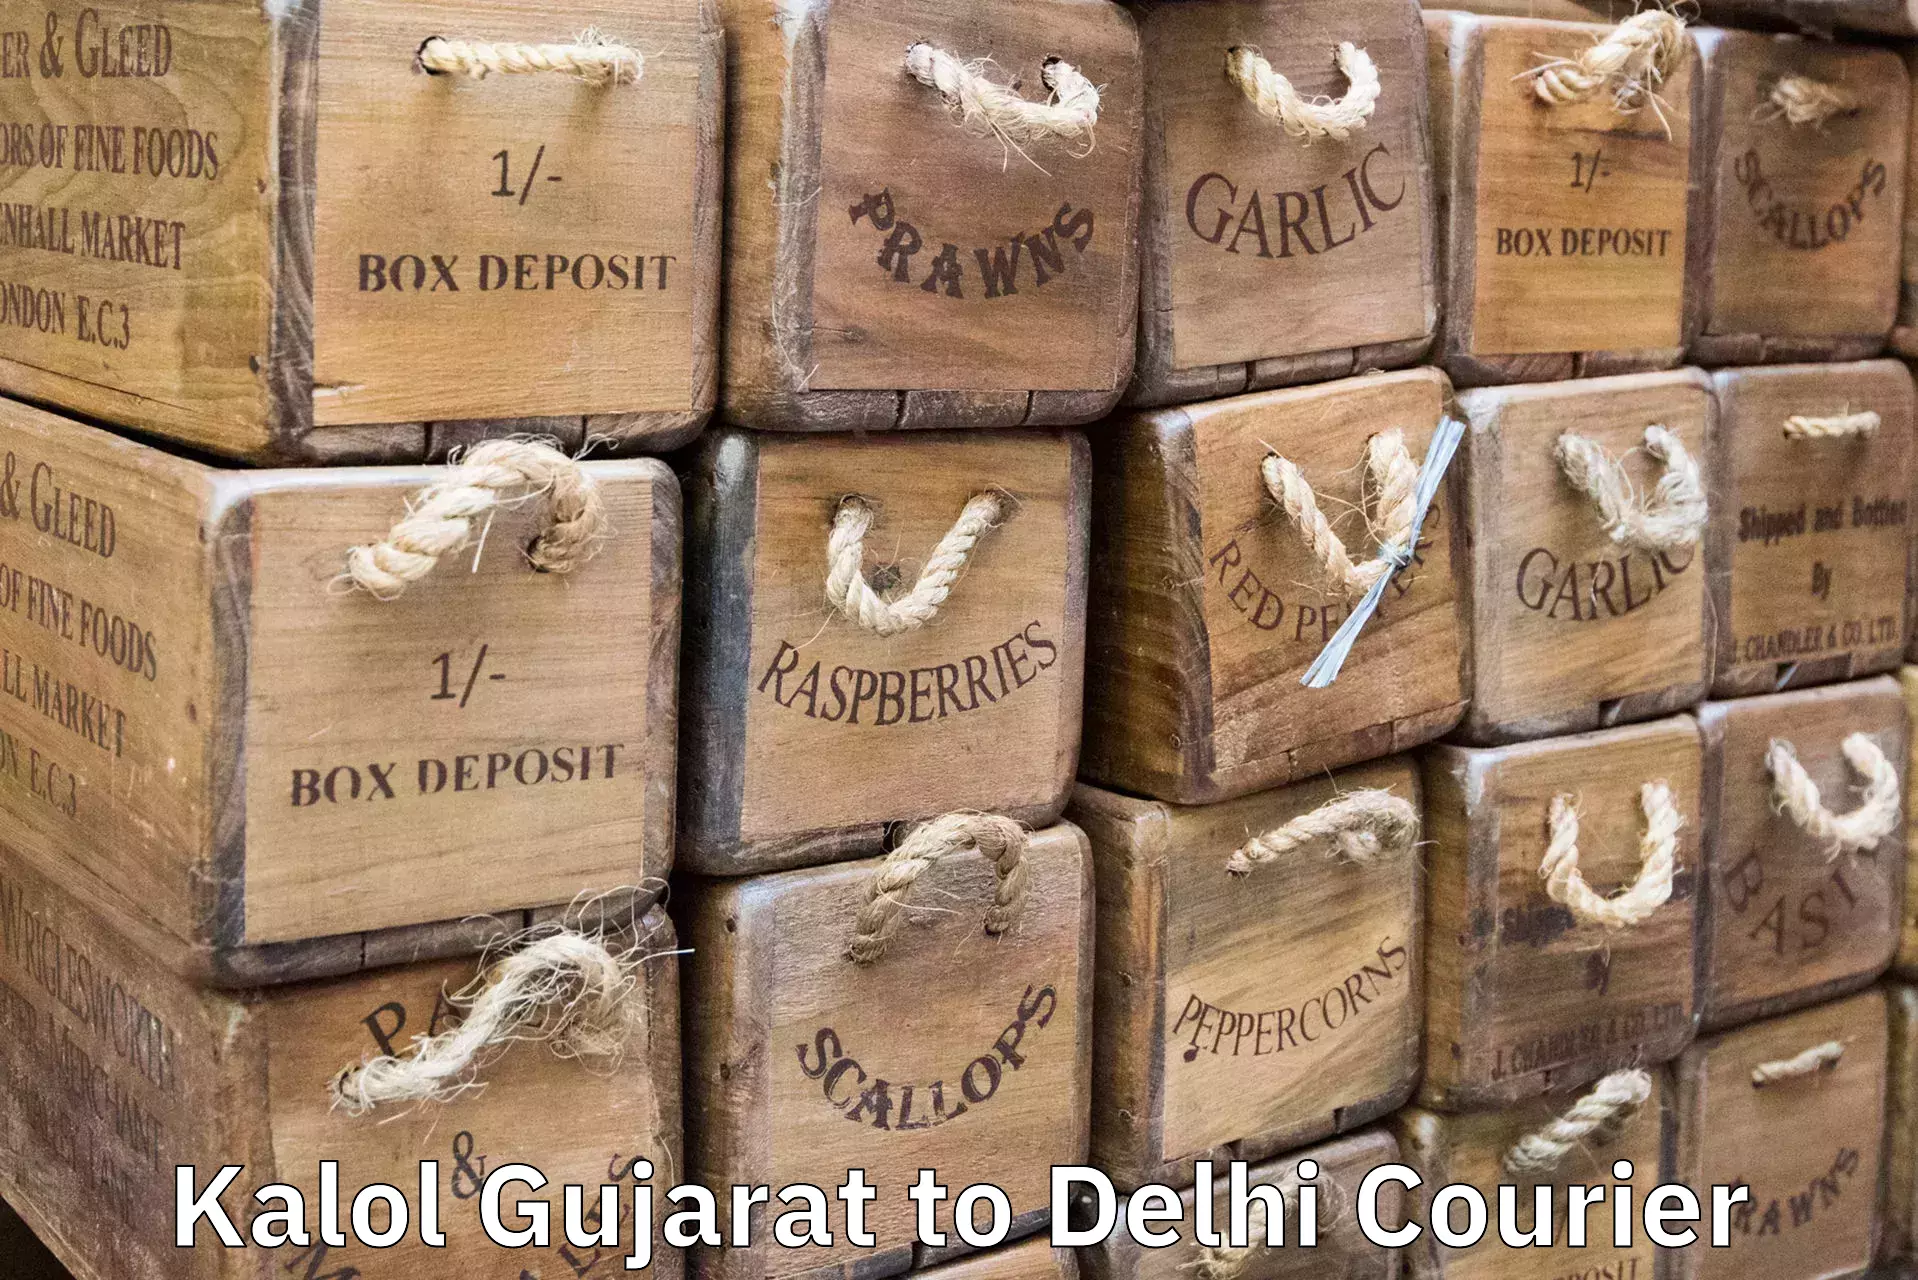 Luggage dispatch service Kalol Gujarat to University of Delhi